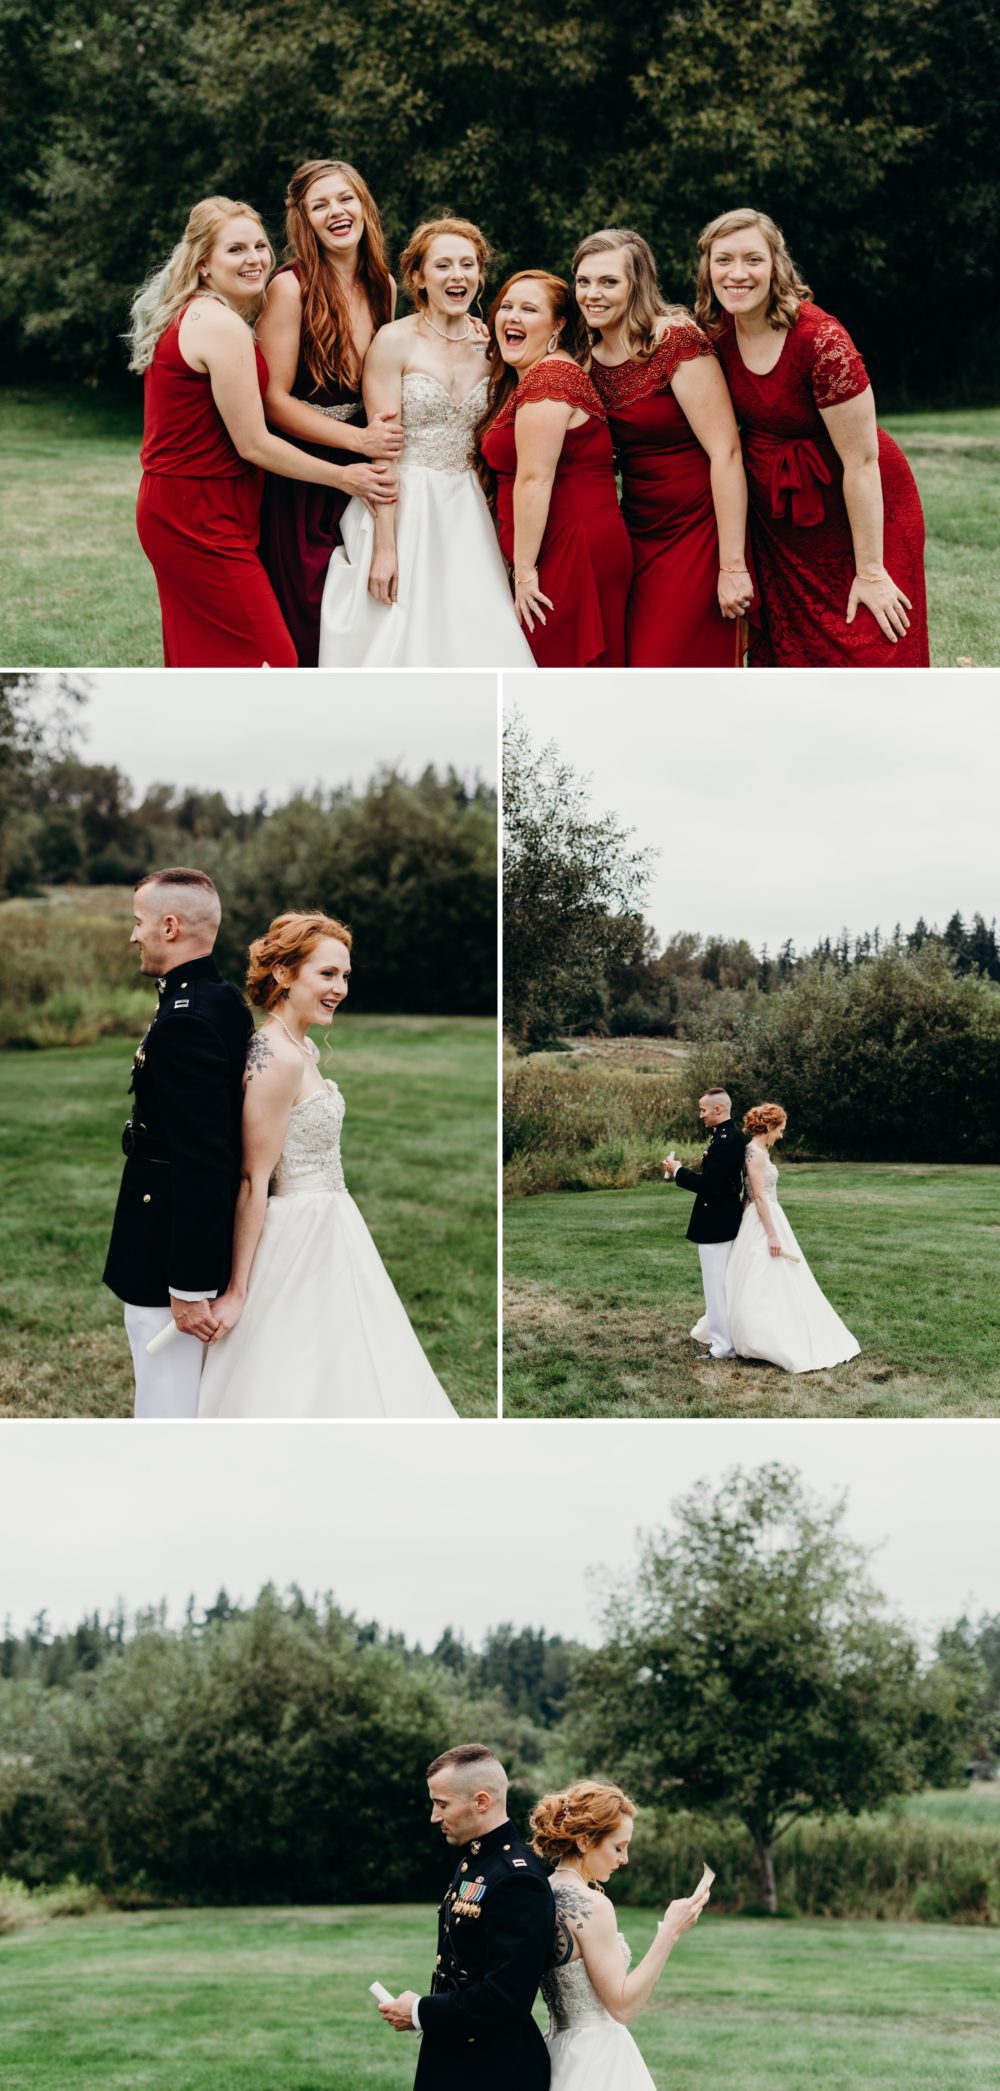 Such a fun wedding day! By Seattle wedding photographer Briana Morrison